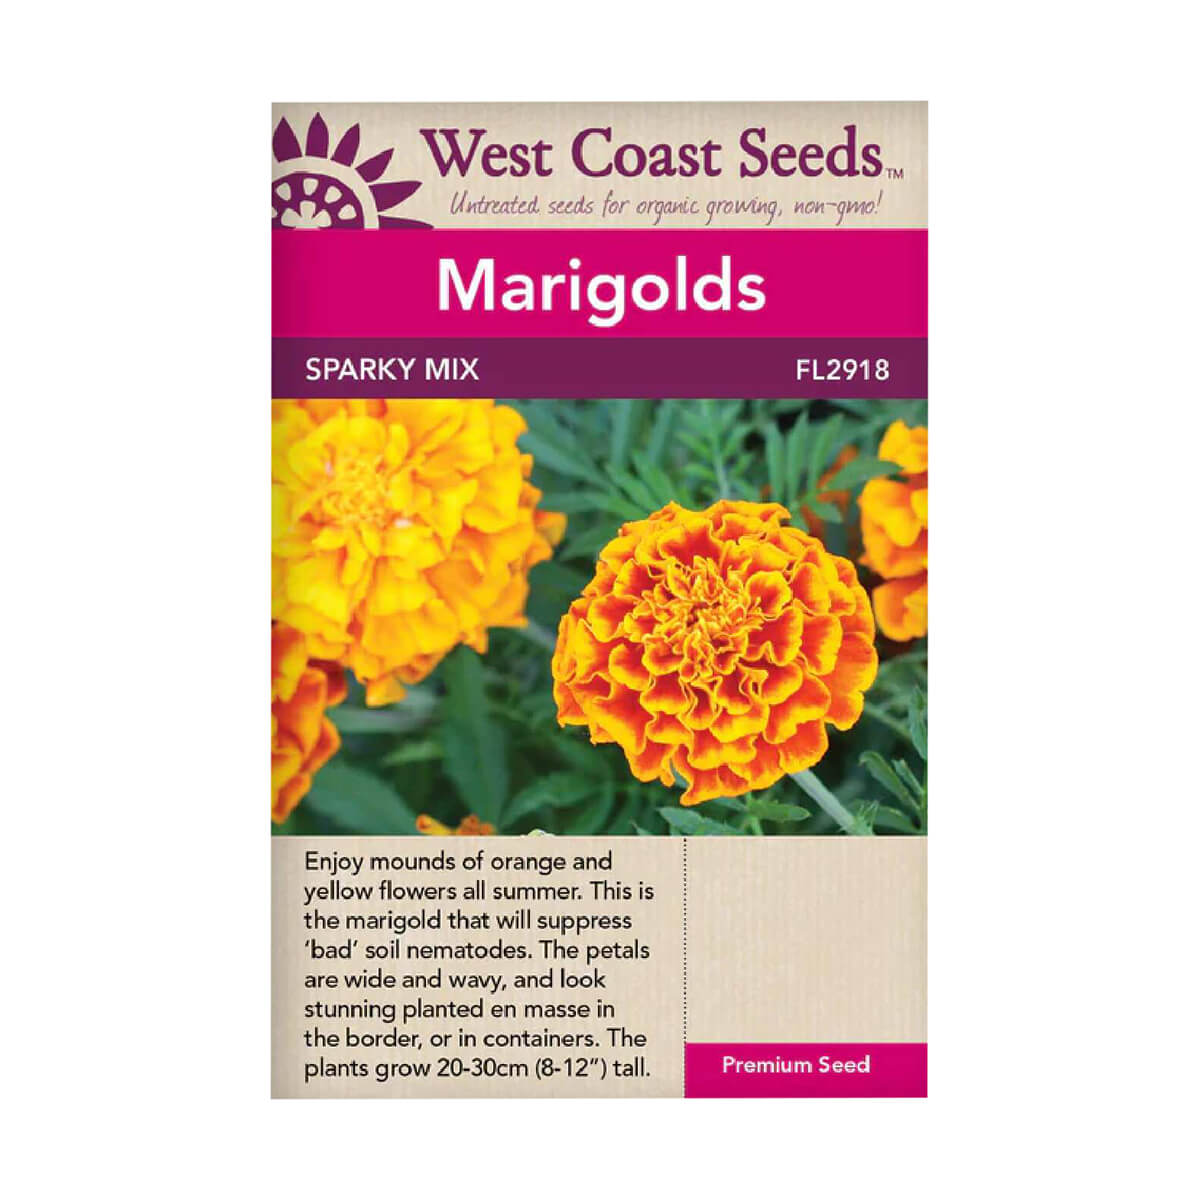 Sparky Mix Marigold Seeds - approx. 1600 seeds